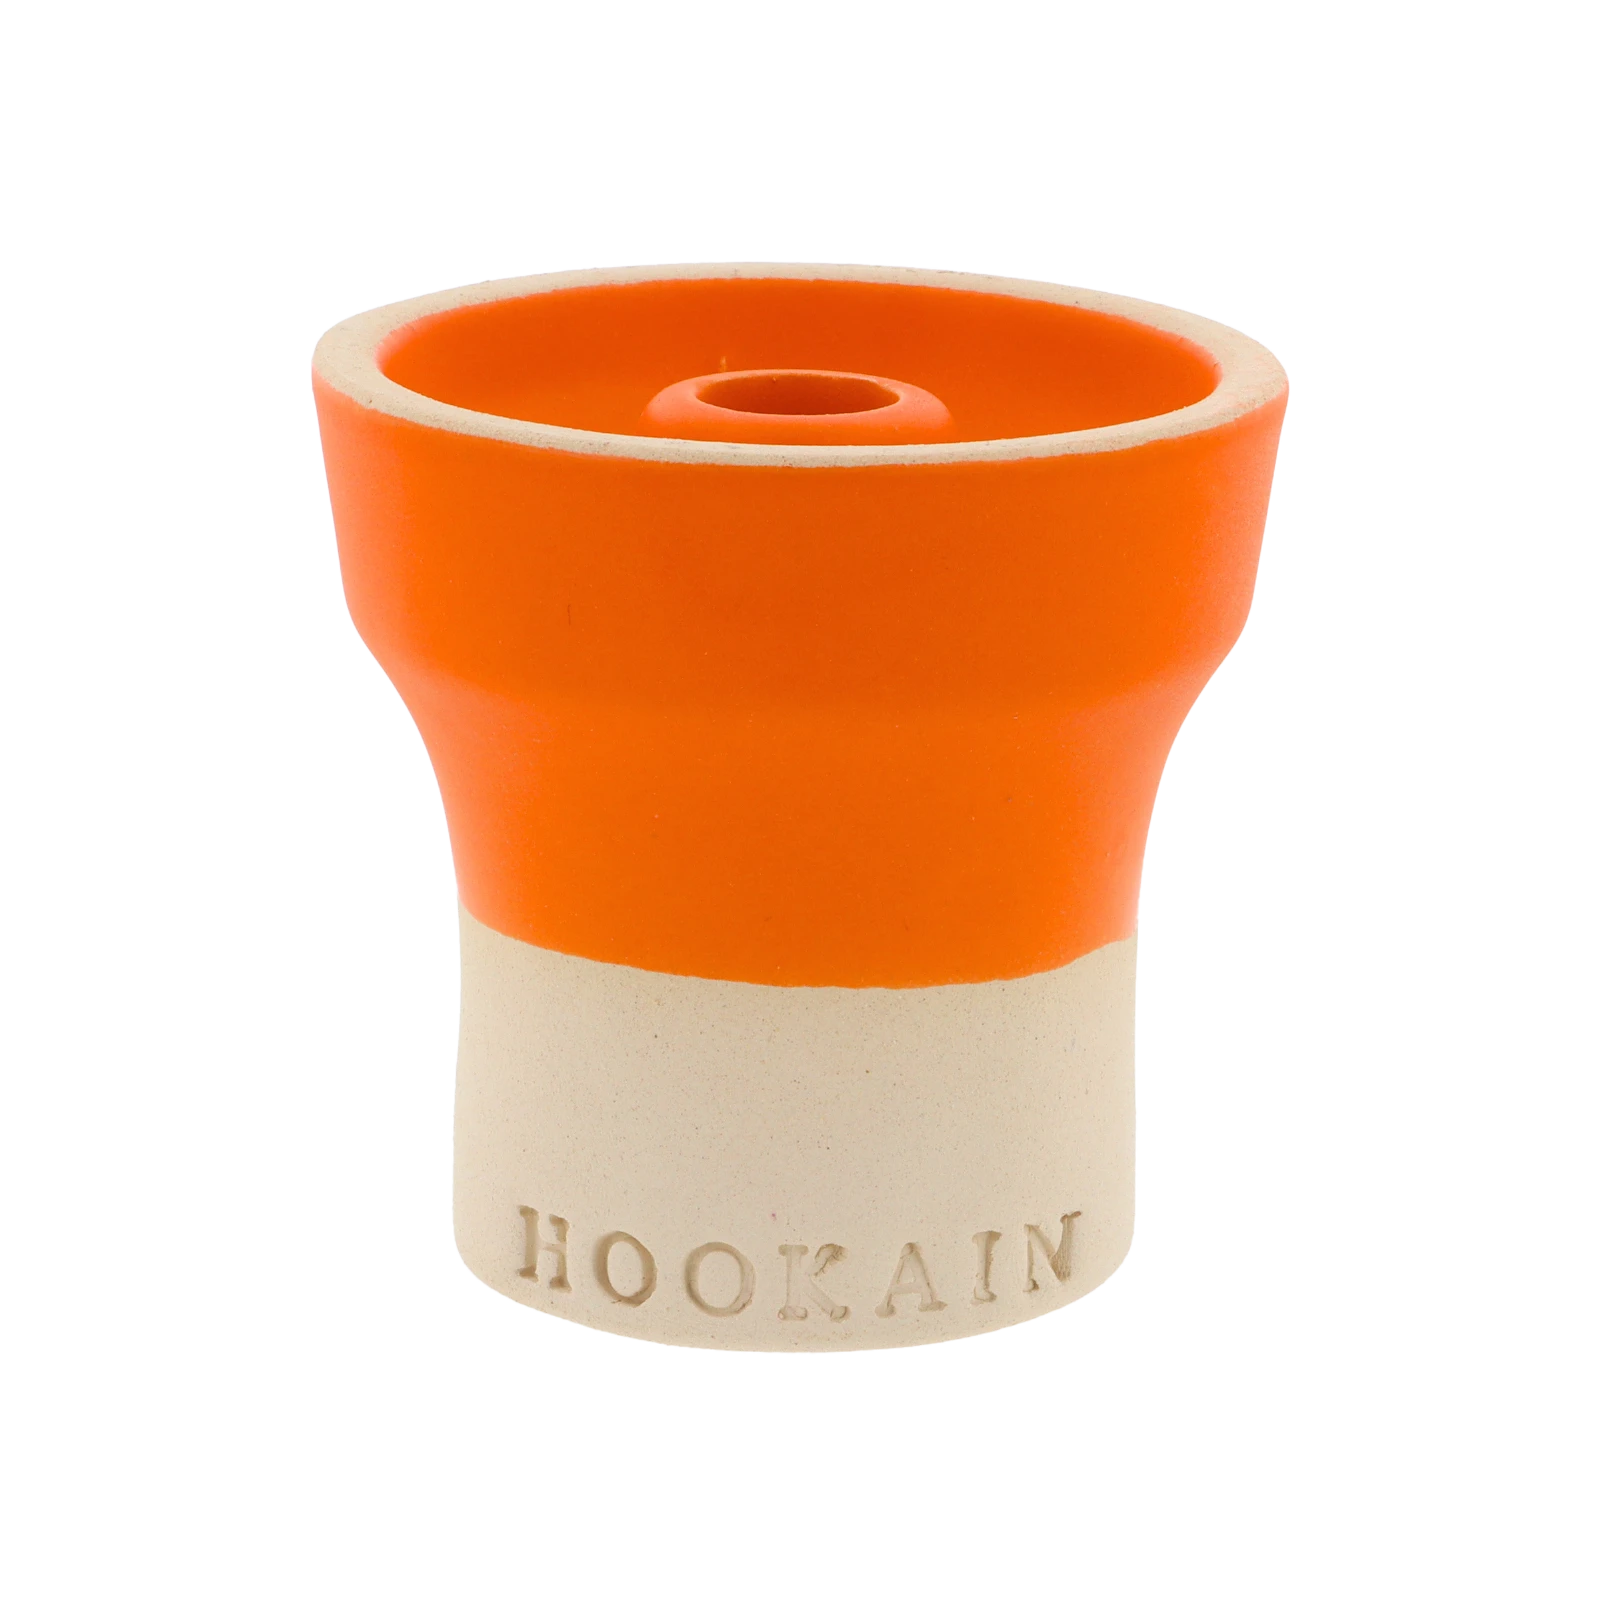 HOOKAIN | POPO - Phunnel | Shishakopf | Online kaufen Basket Bowl Orange 1